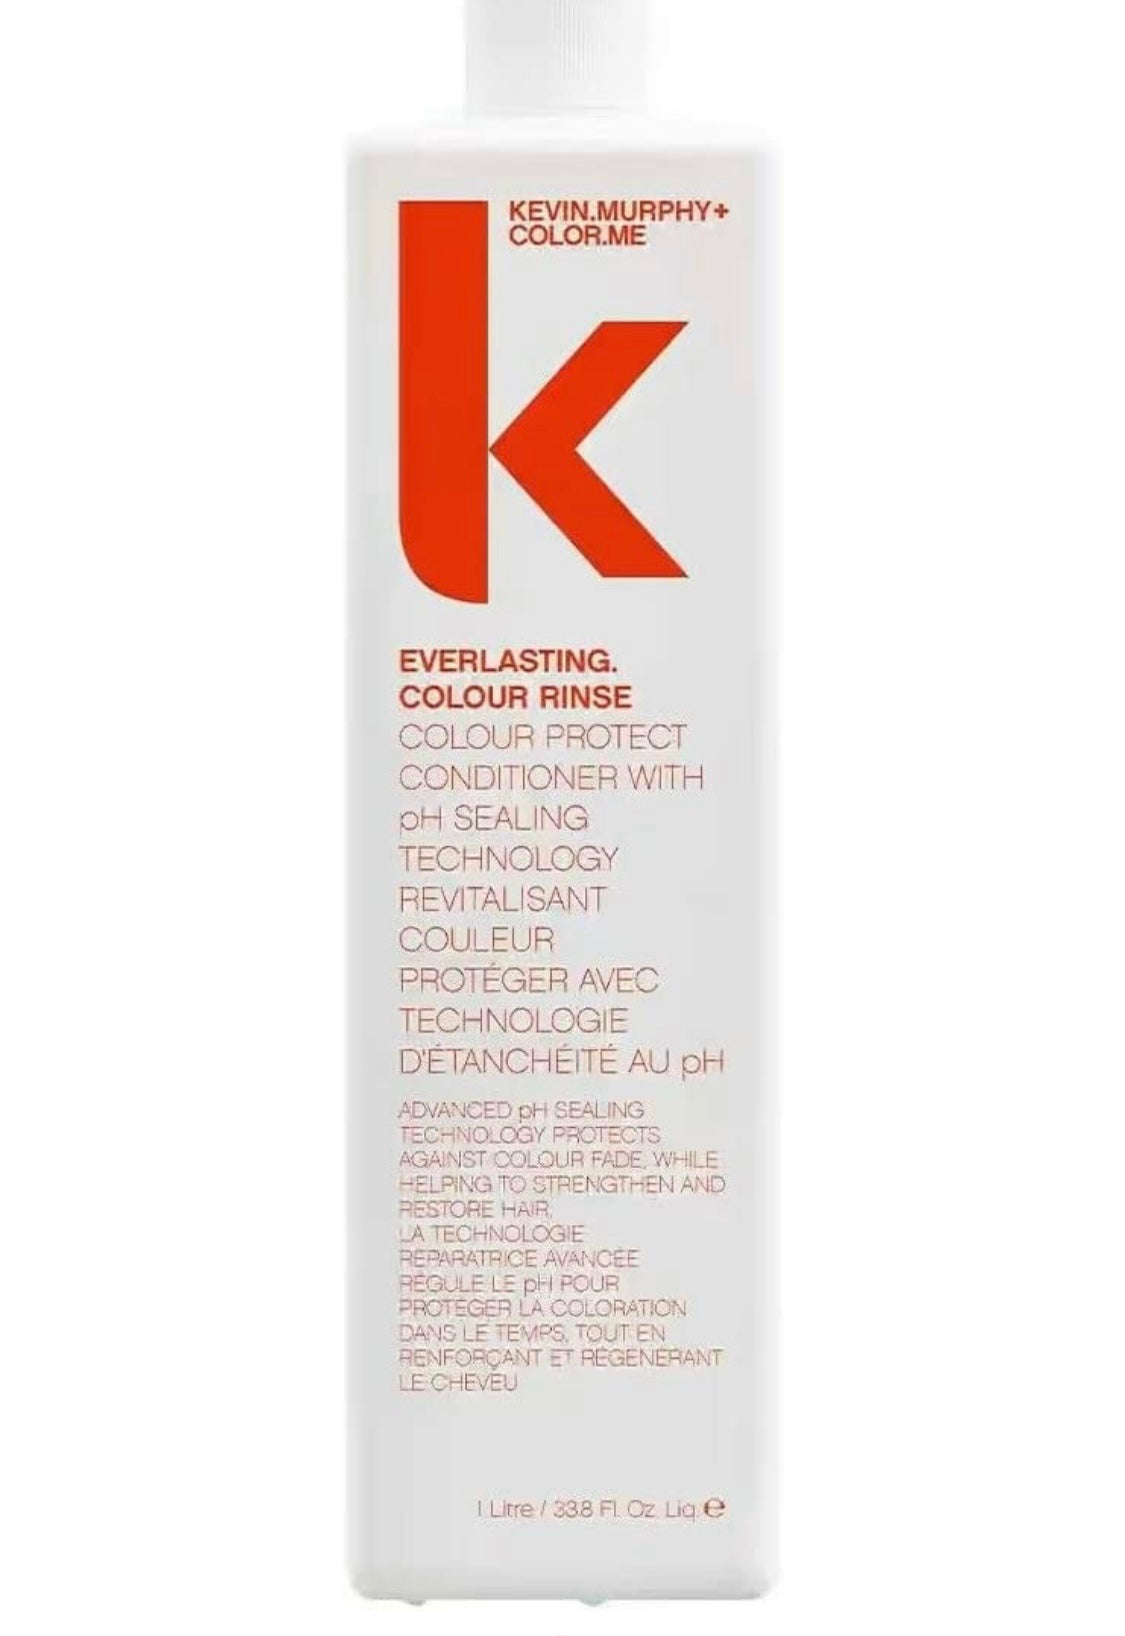 Kevin.Murphy - Everlasting.Colour Rinse  33.8 fl. oz. / 1 L